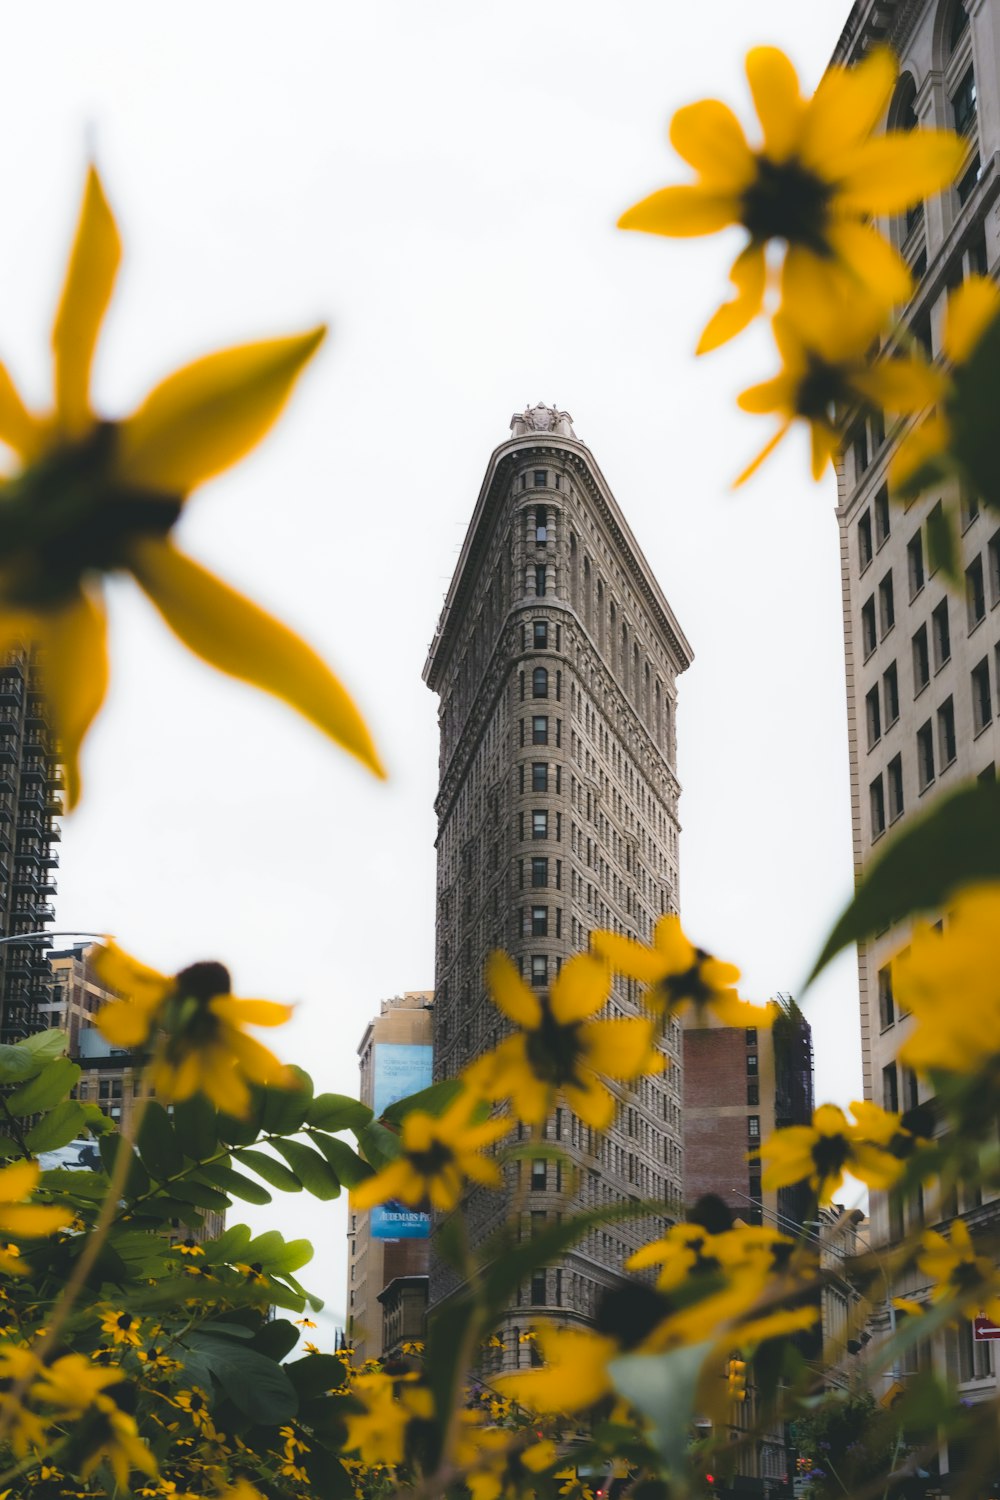 flores amarelas perto do edifício de concreto cinza durante o dia